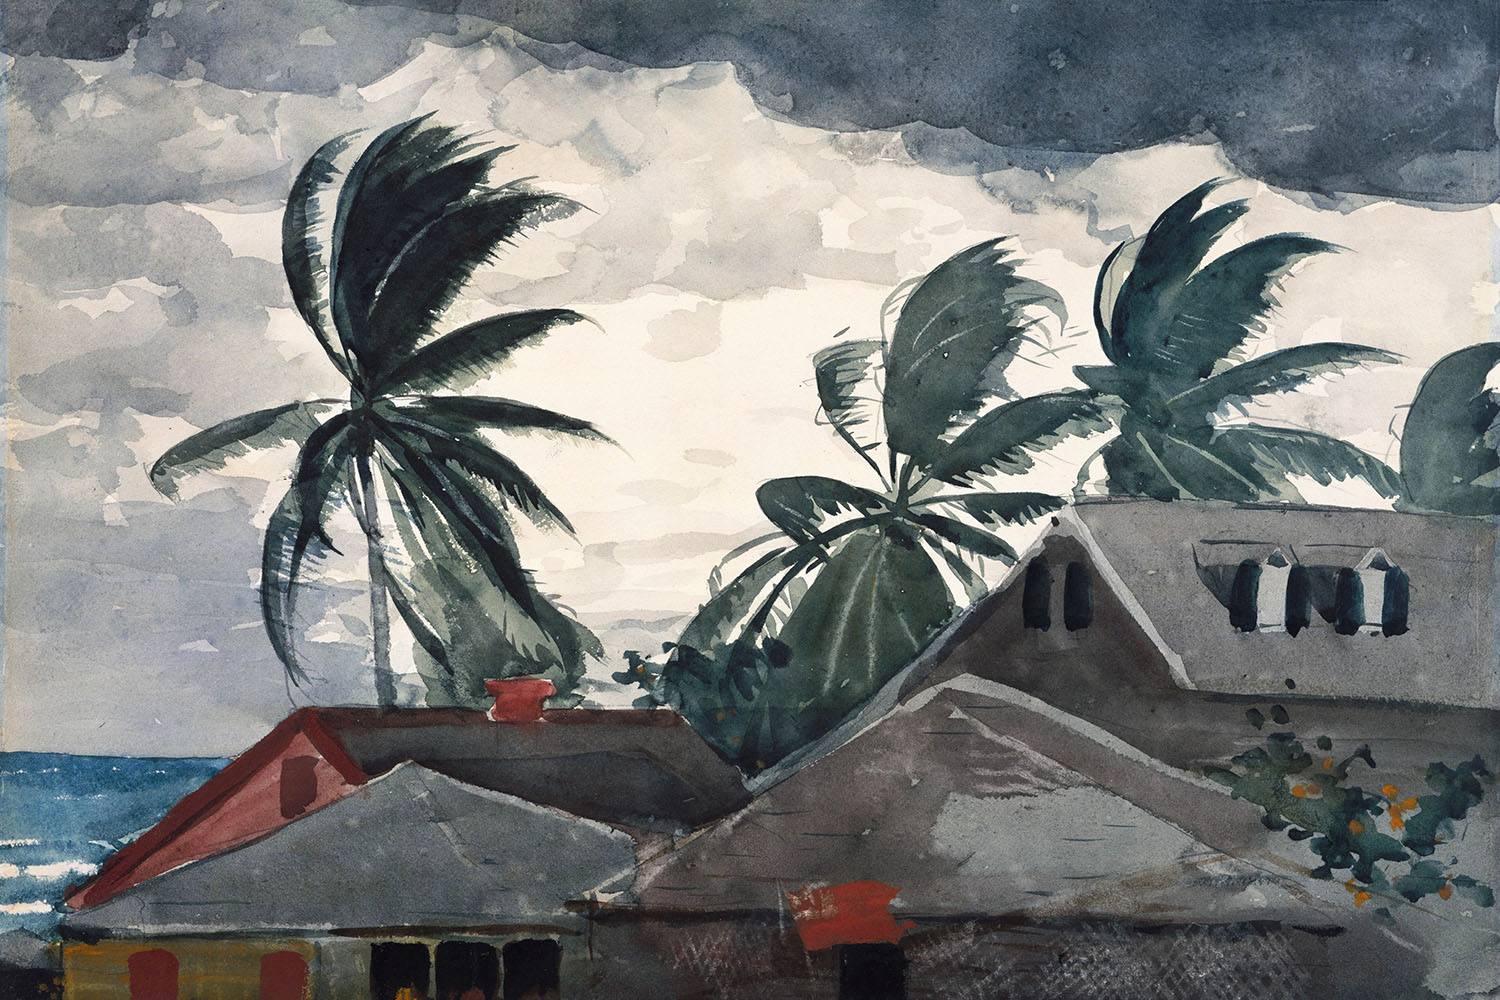 Hurricane, Bahamas, by Winslow Homer, 1898.